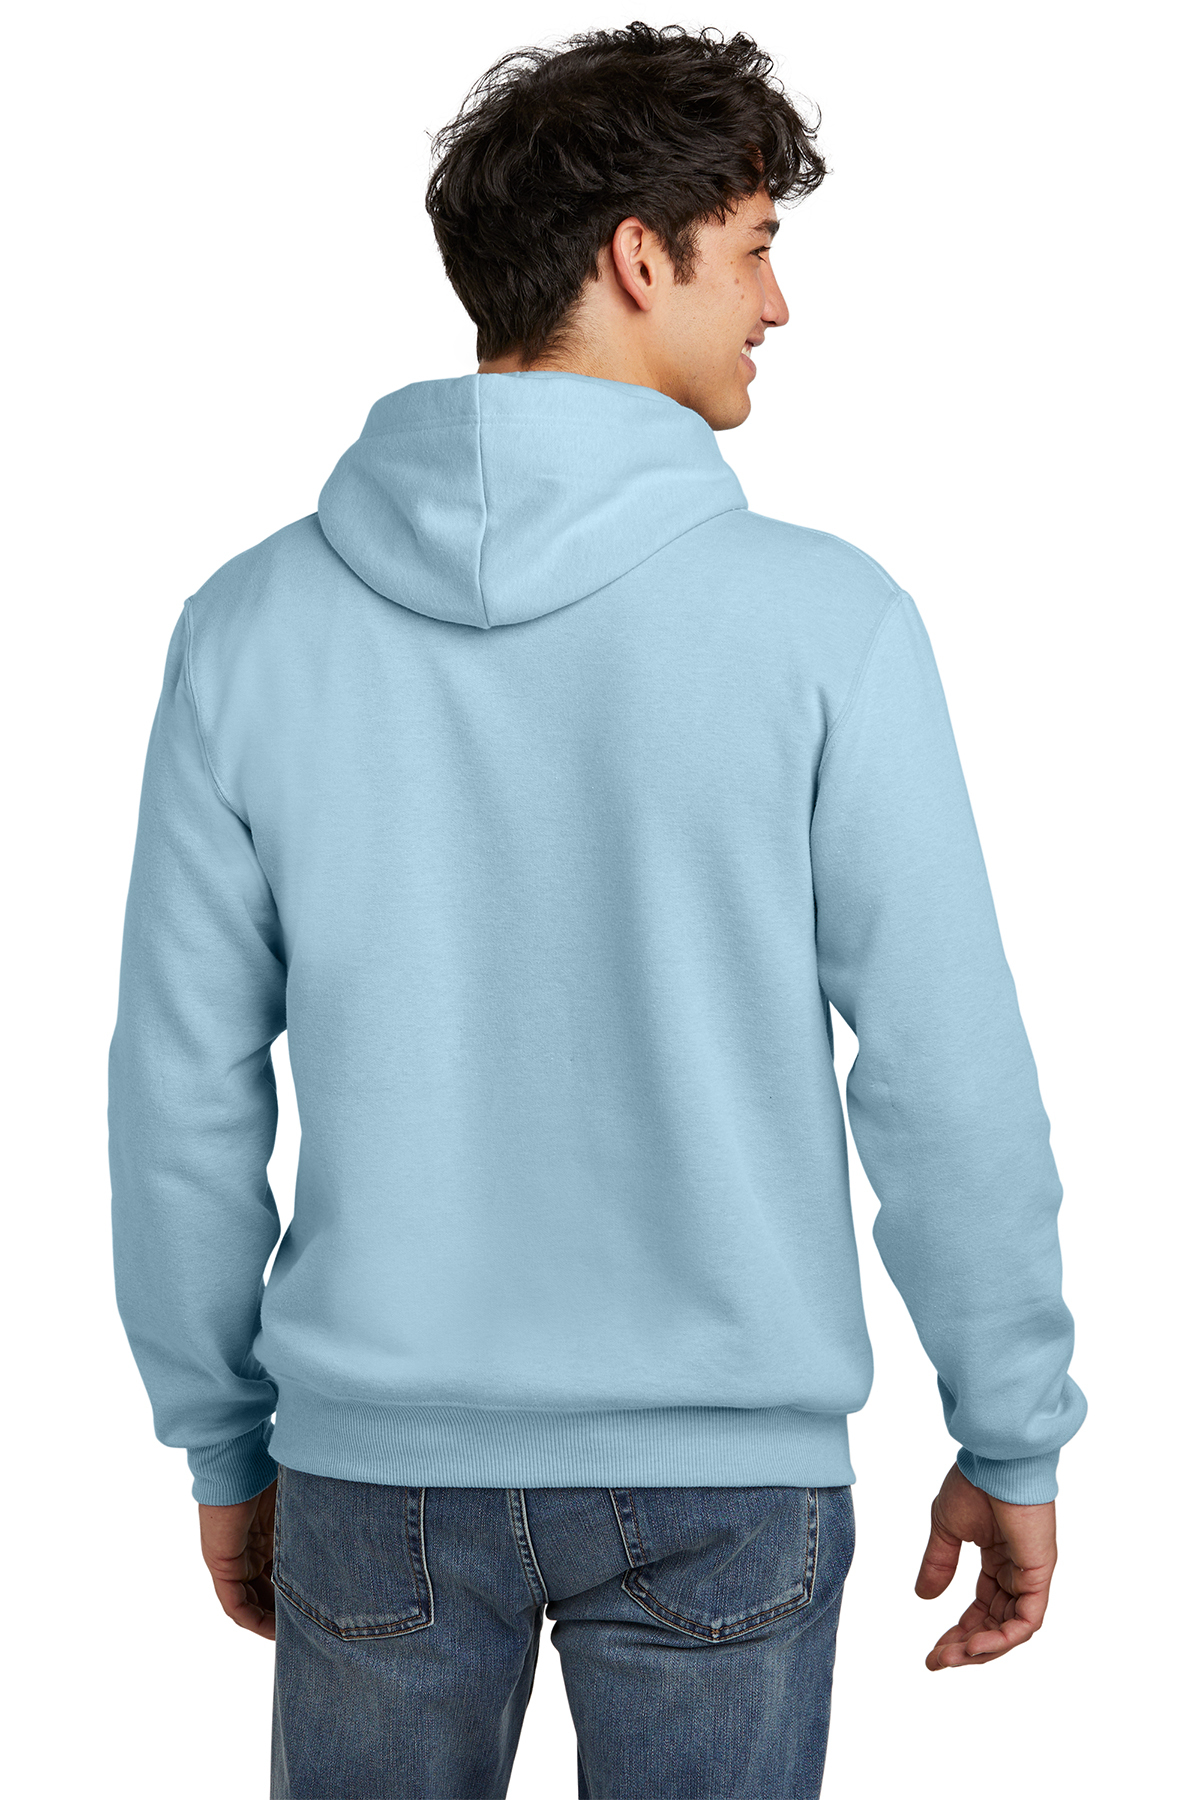 Jerzees Eco Premium Blend Pullover Hooded Sweatshirt, Product